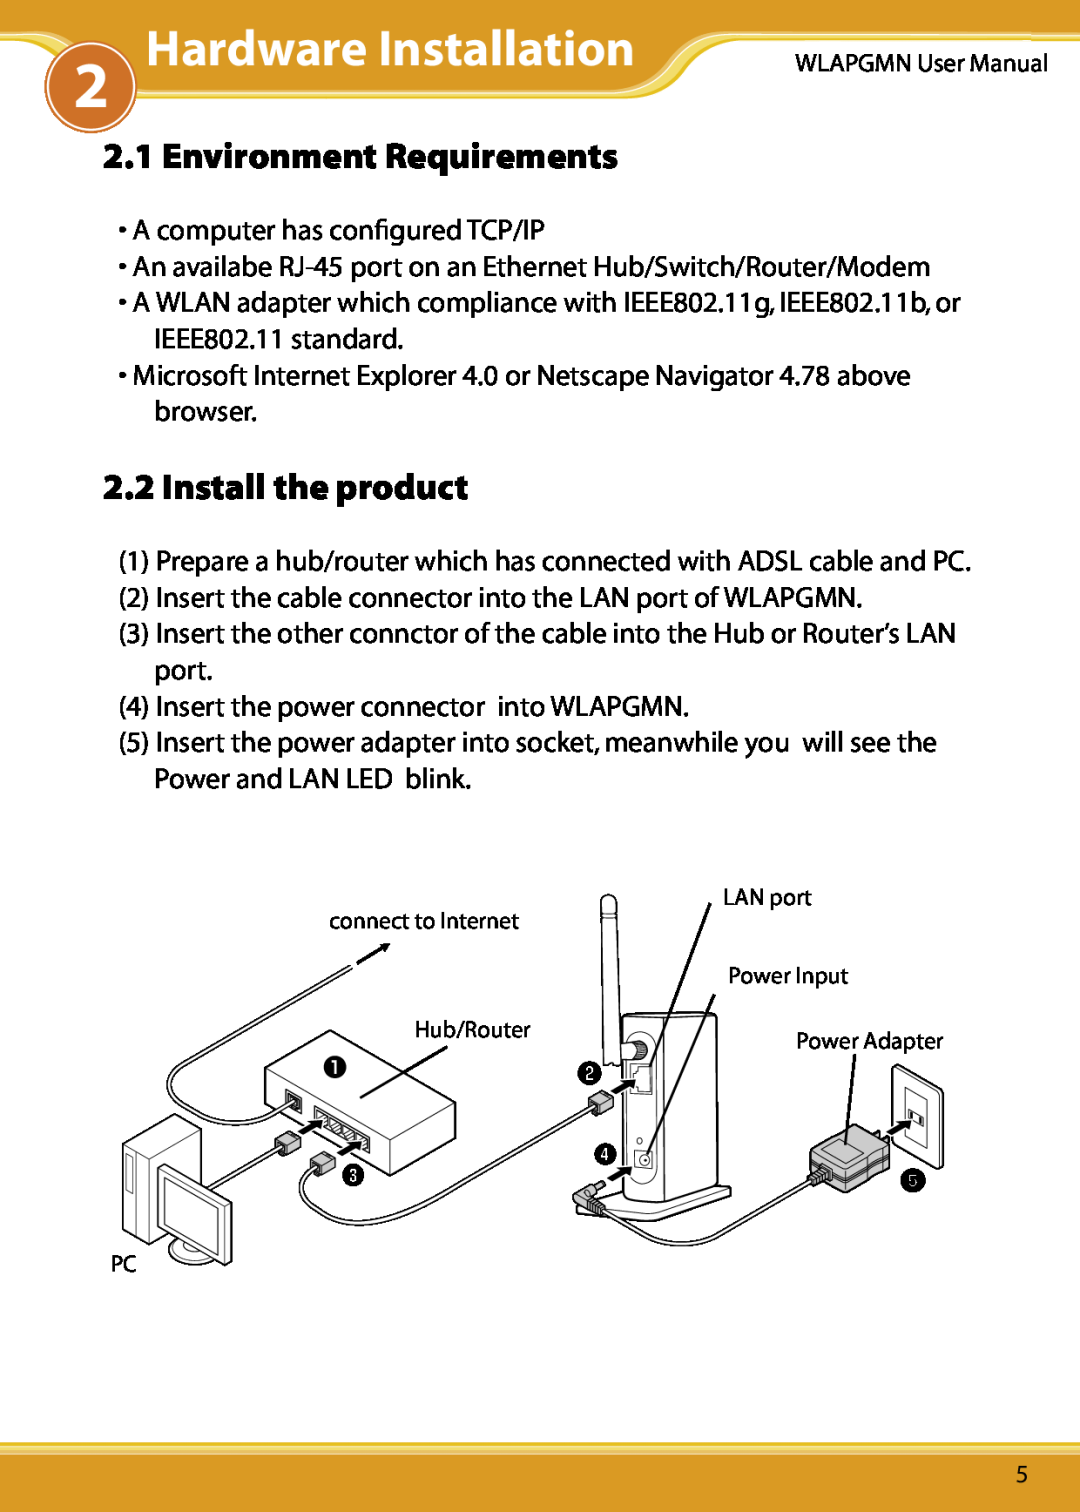 Corega CG-WLAPGMN user manual Hardware Installation, Environment Requirements, Install the product 